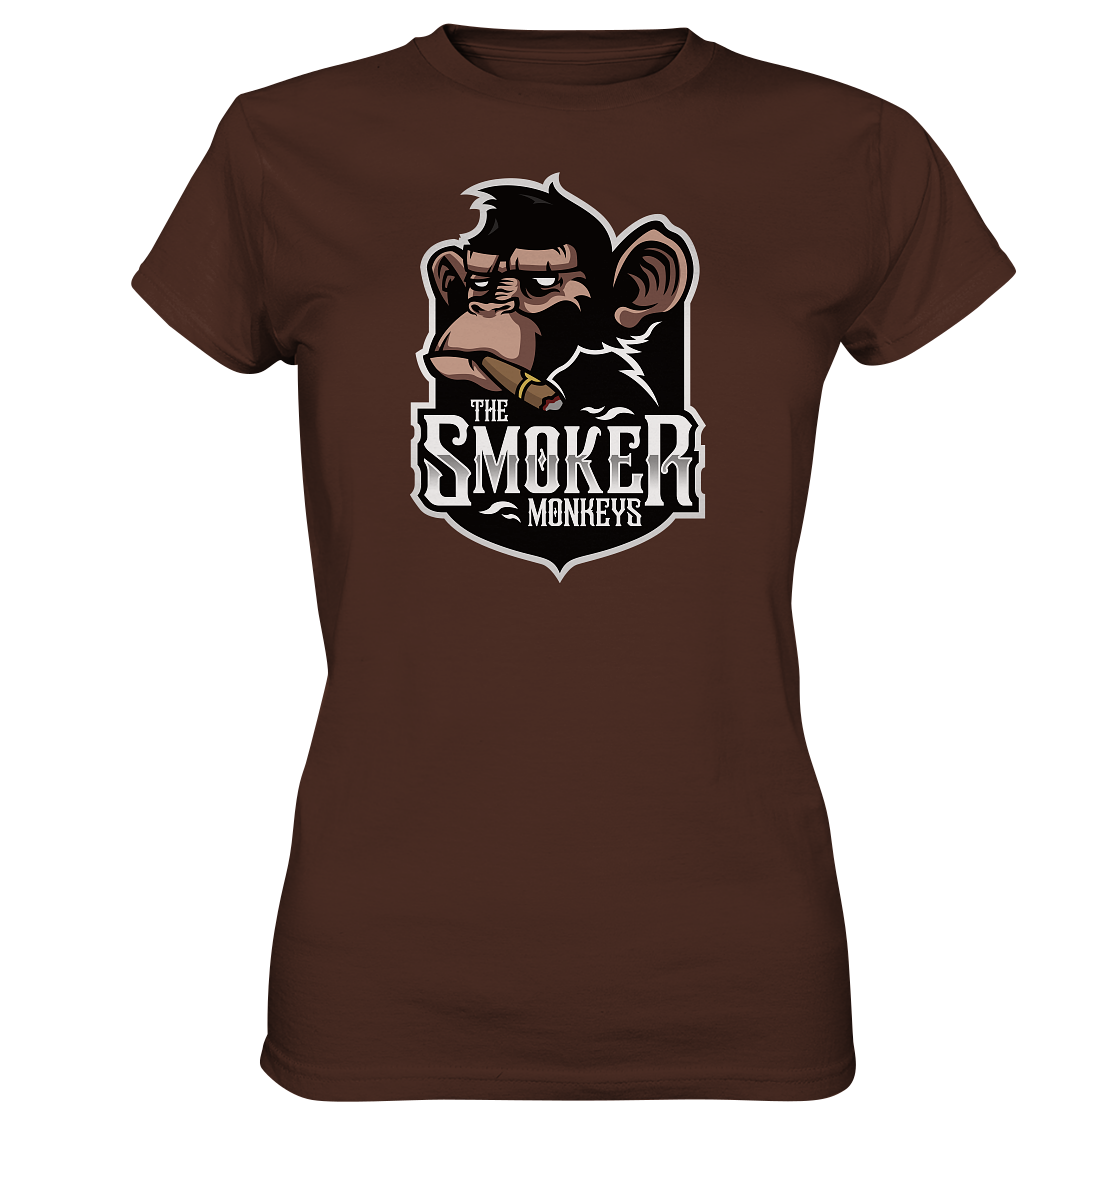 THE SMOKER MONKEYS - Ladies Basic Shirt